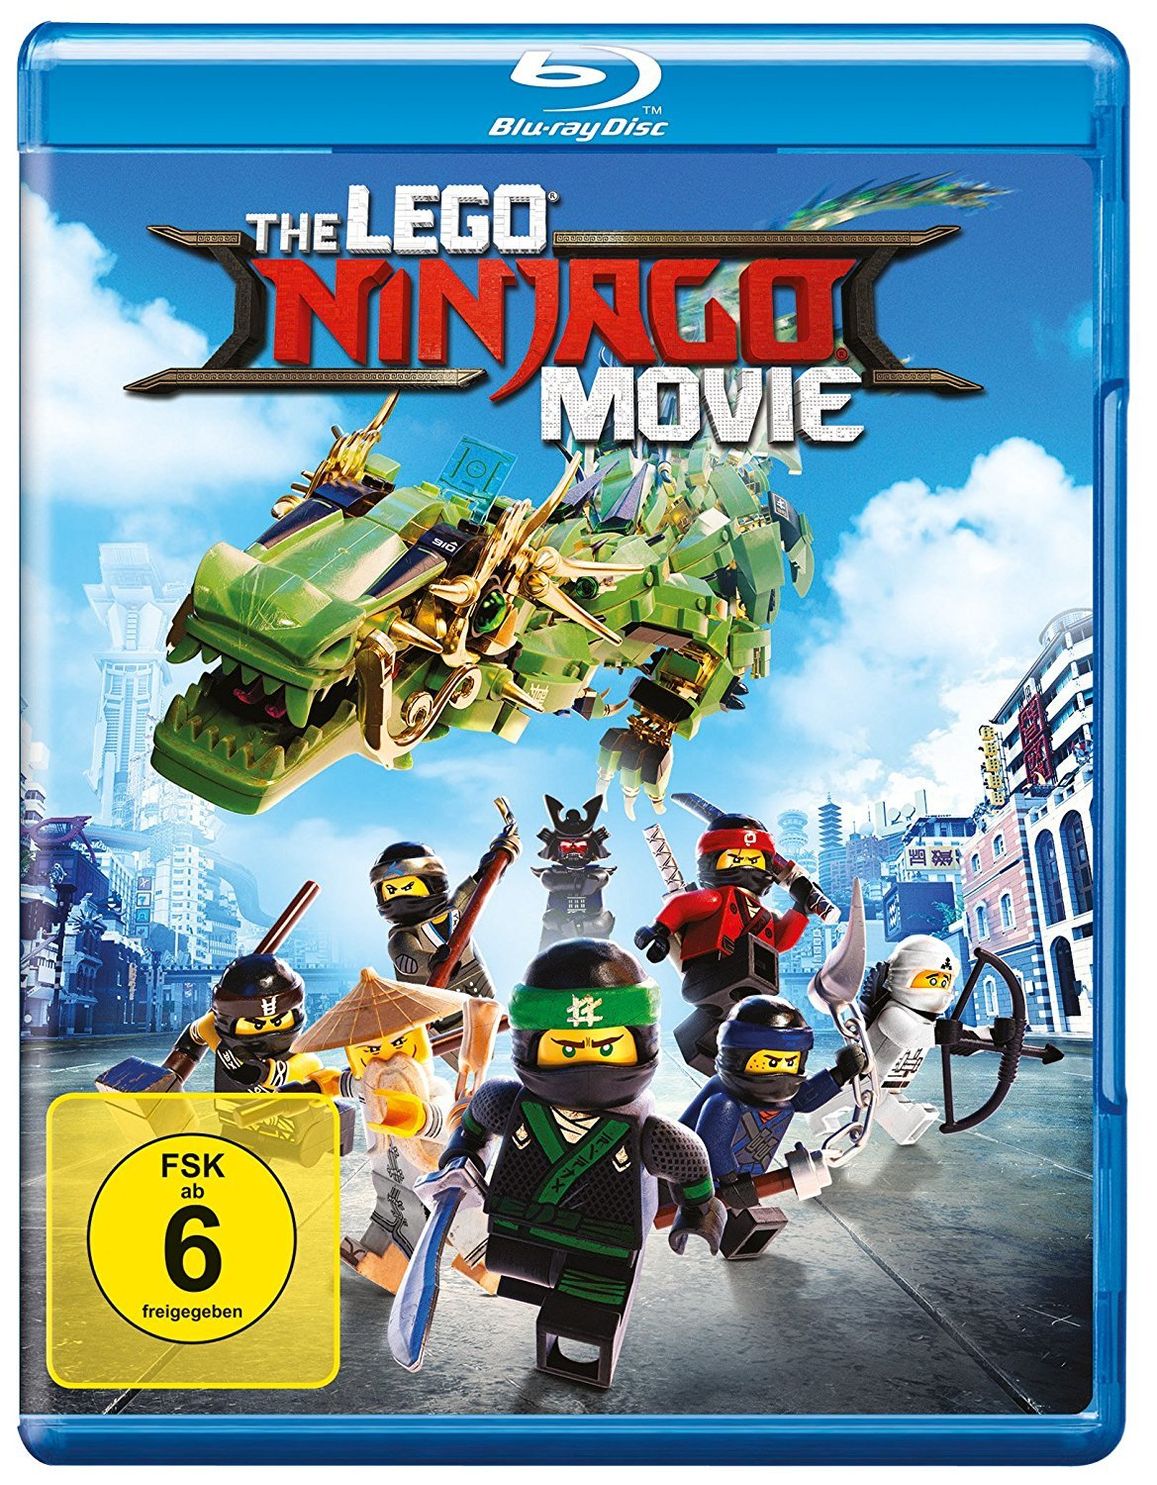 The LEGO Ninjago Movie Blu-ray bei Weltbild.de kaufen